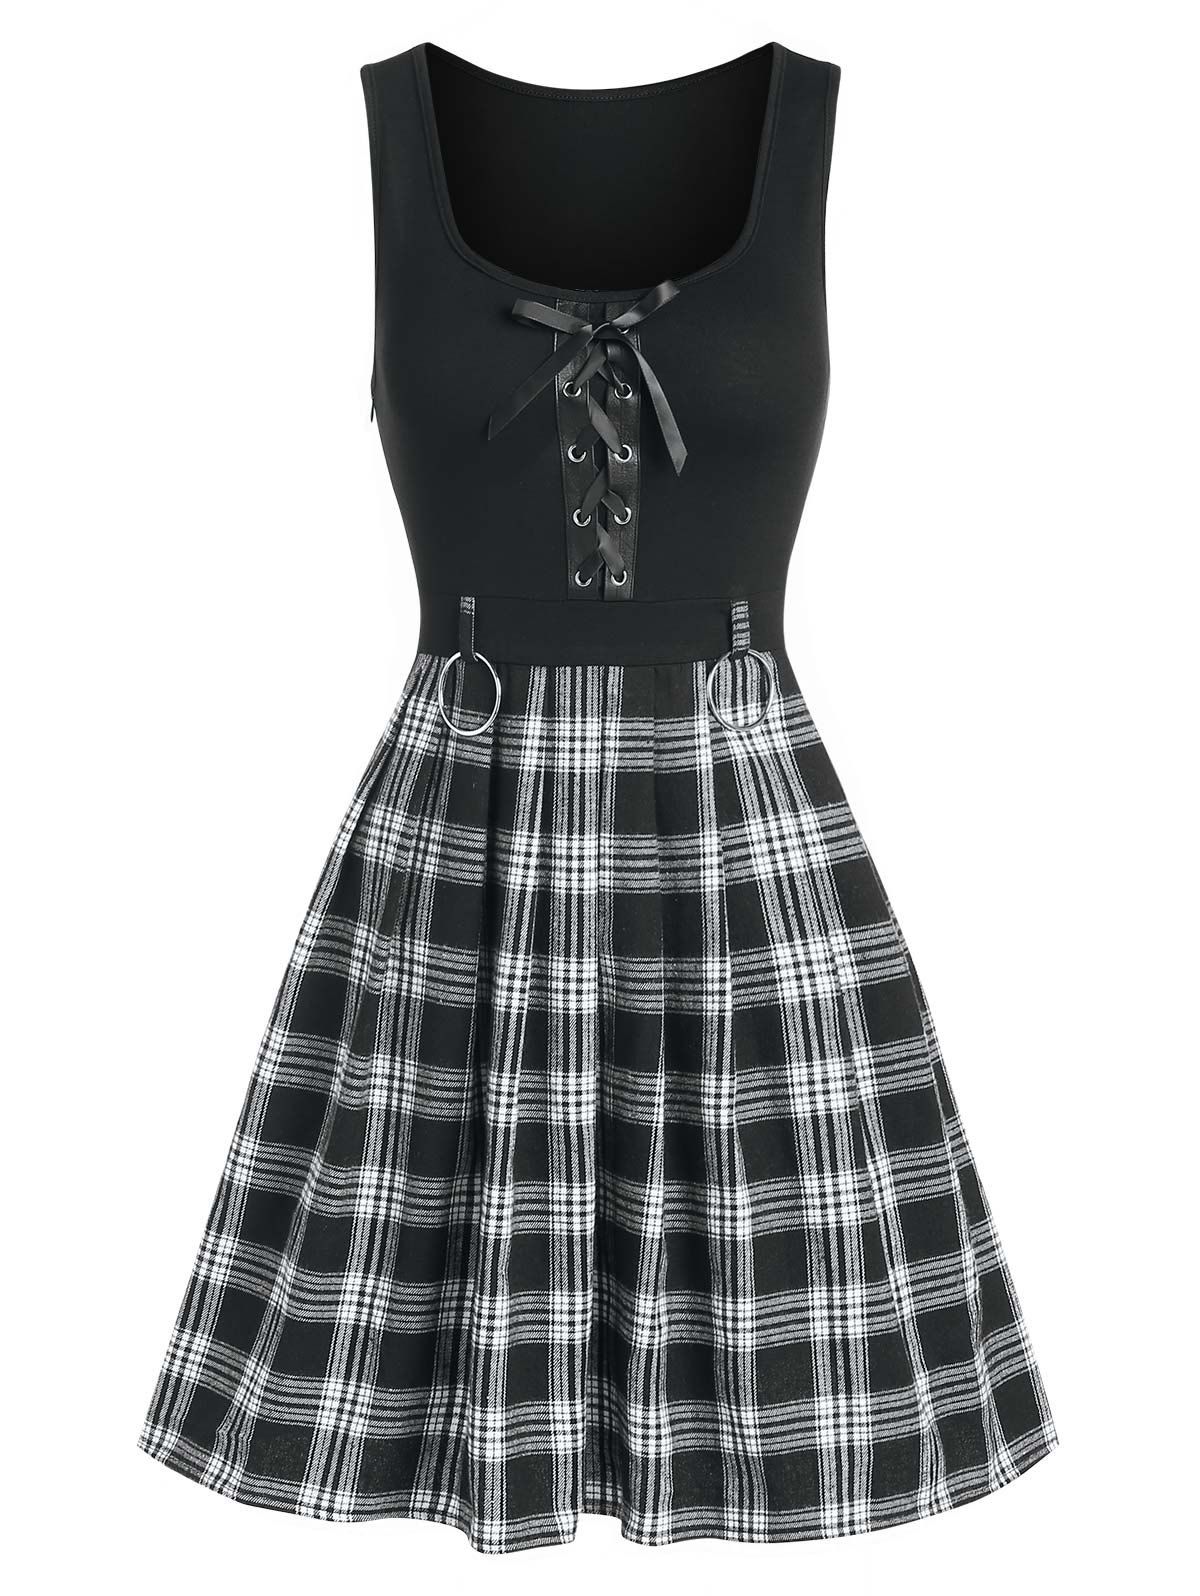 Gothic Lace Up O Ring Plaid Dress - BLACK XXL